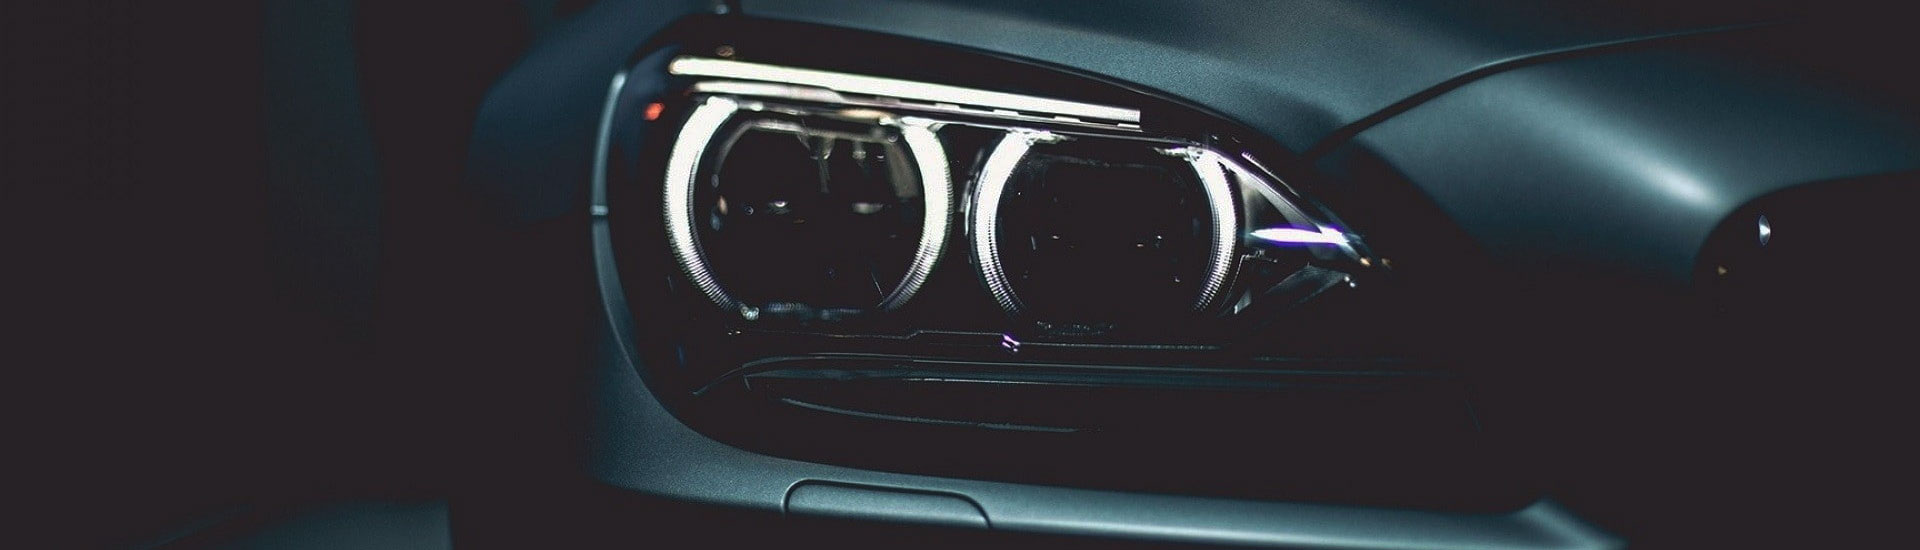 BMW i8 Headlight Tint Covers